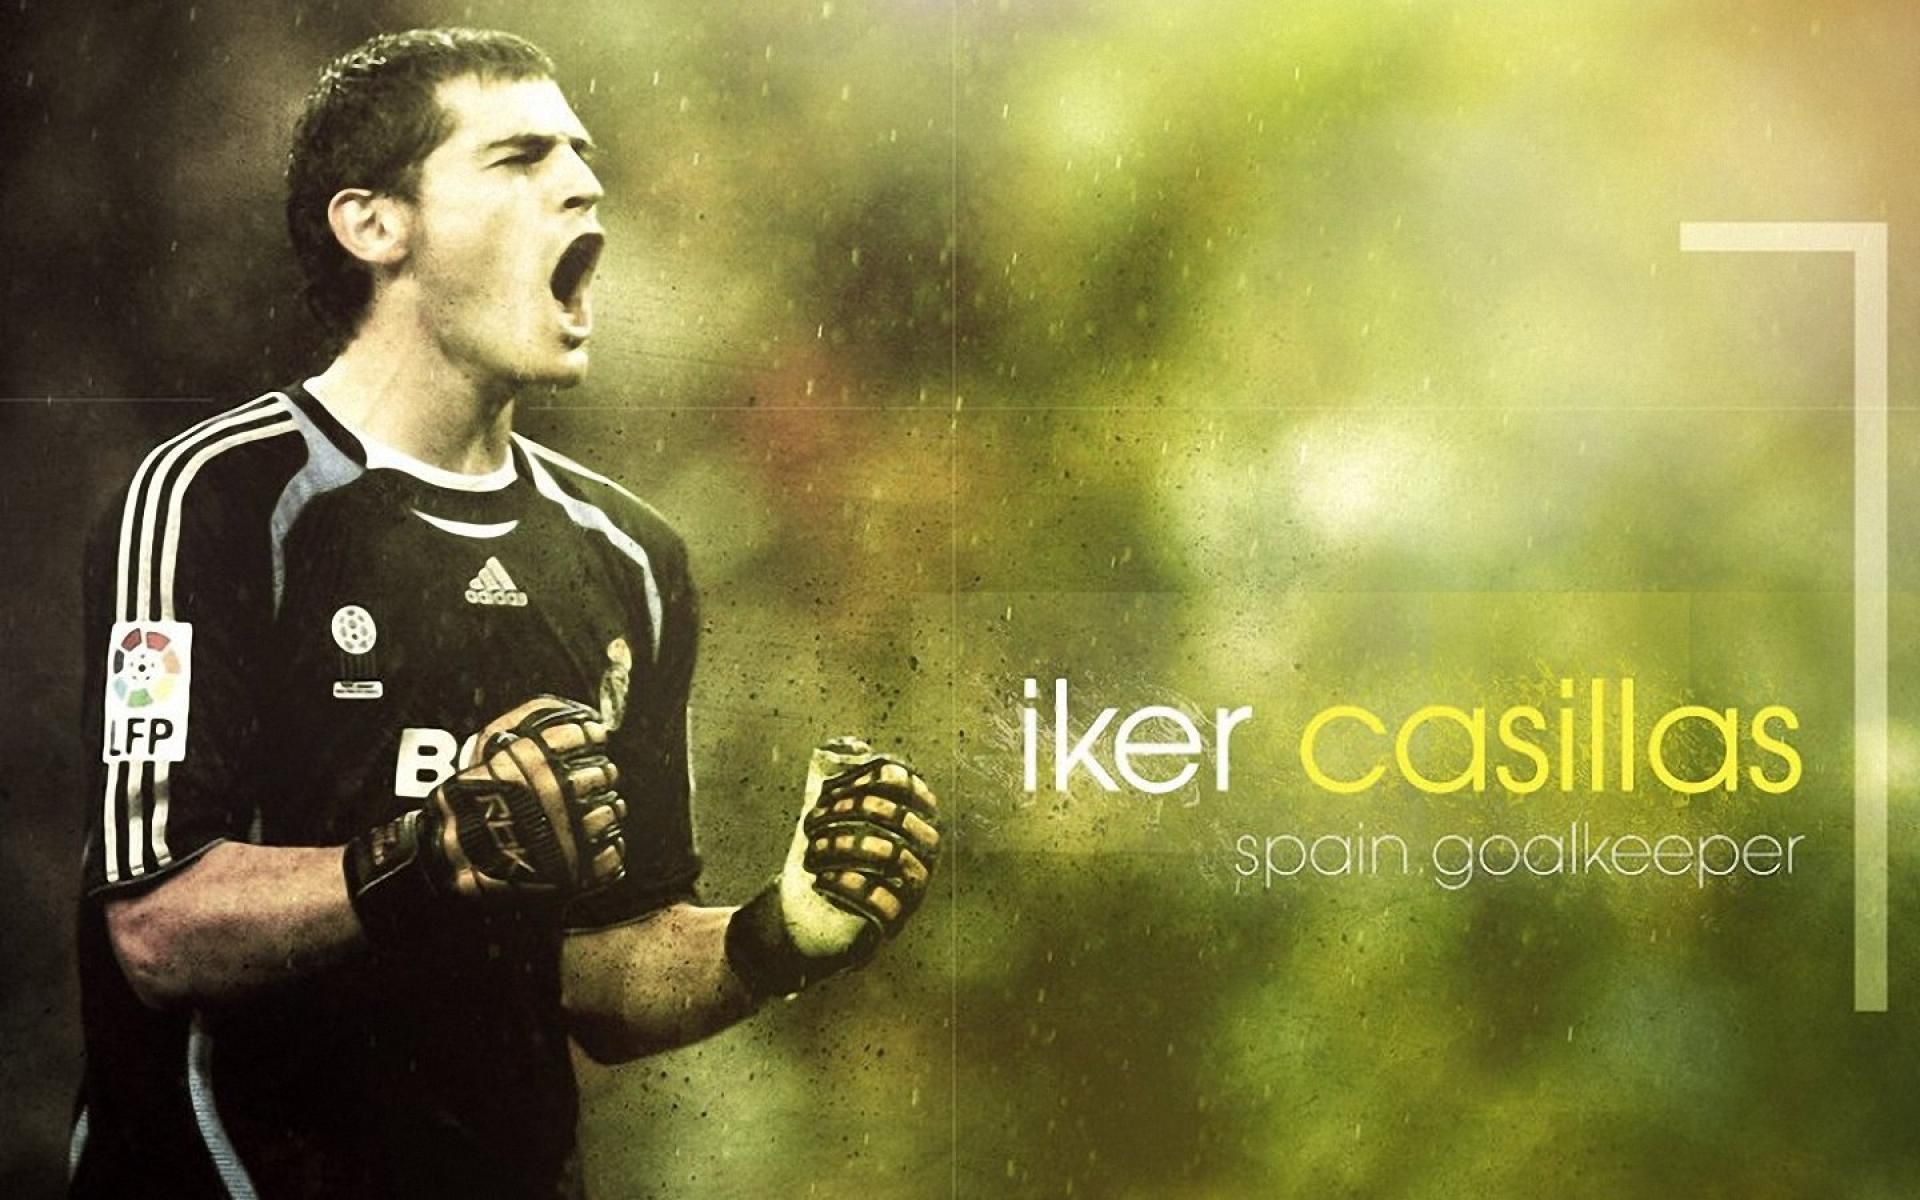 Iker Casillas. image for desktop and wallpaper. Iker casillas